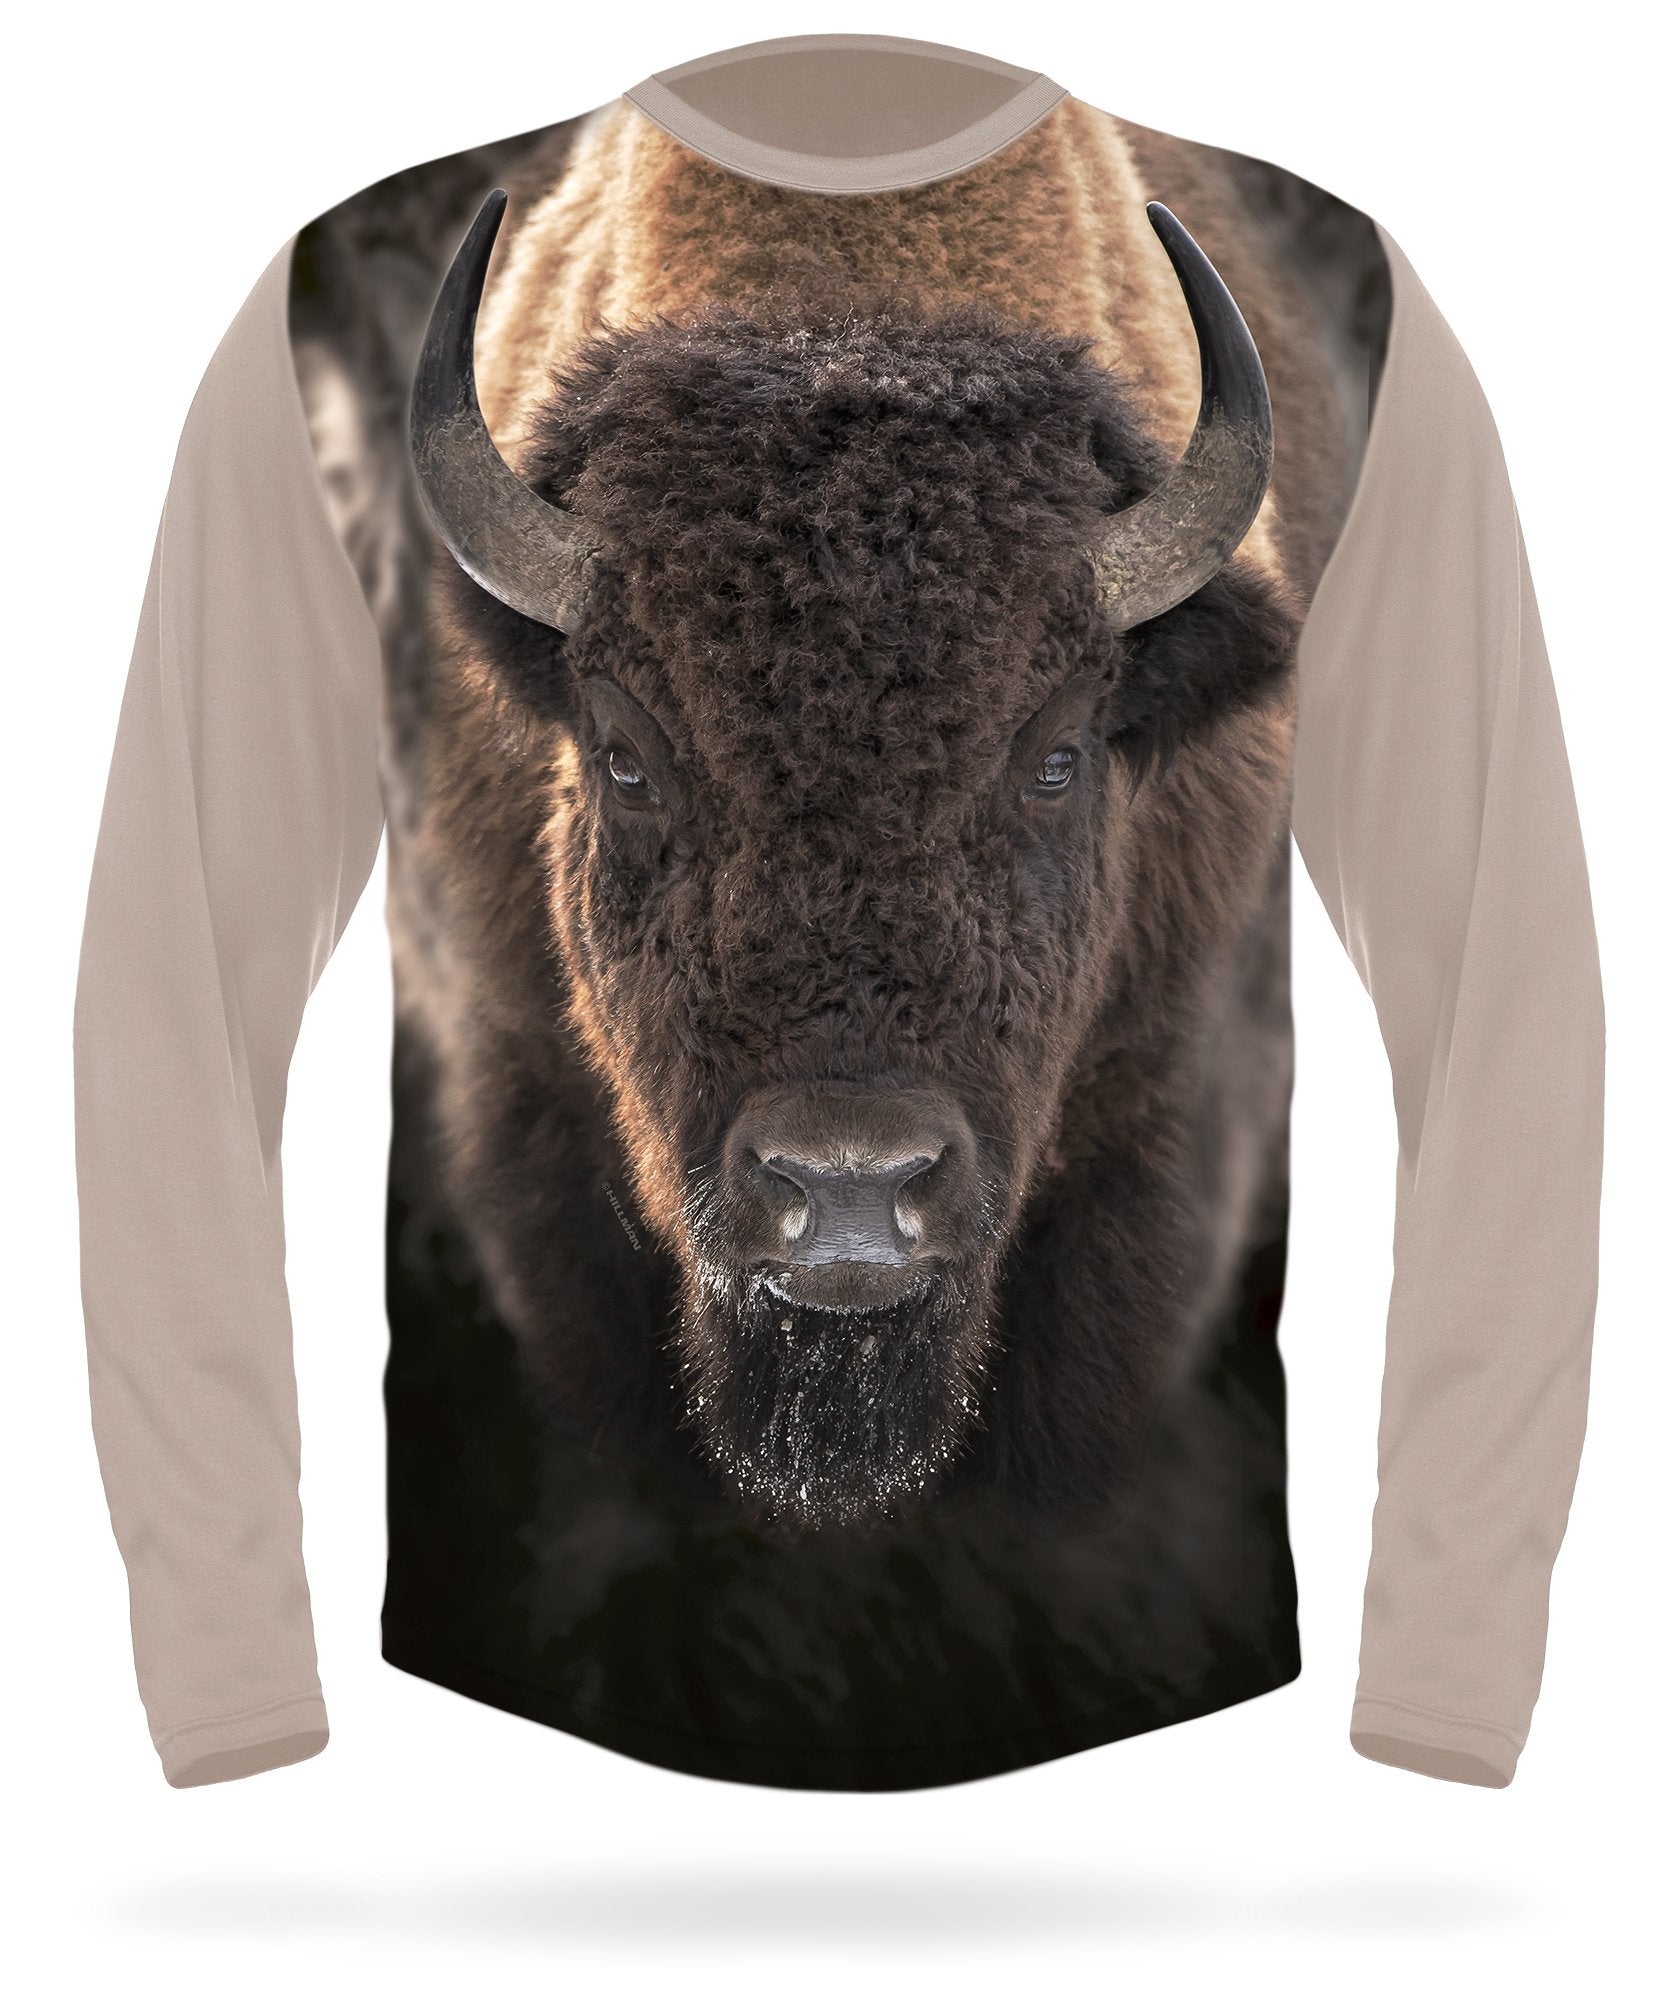 Long sleeve Bison